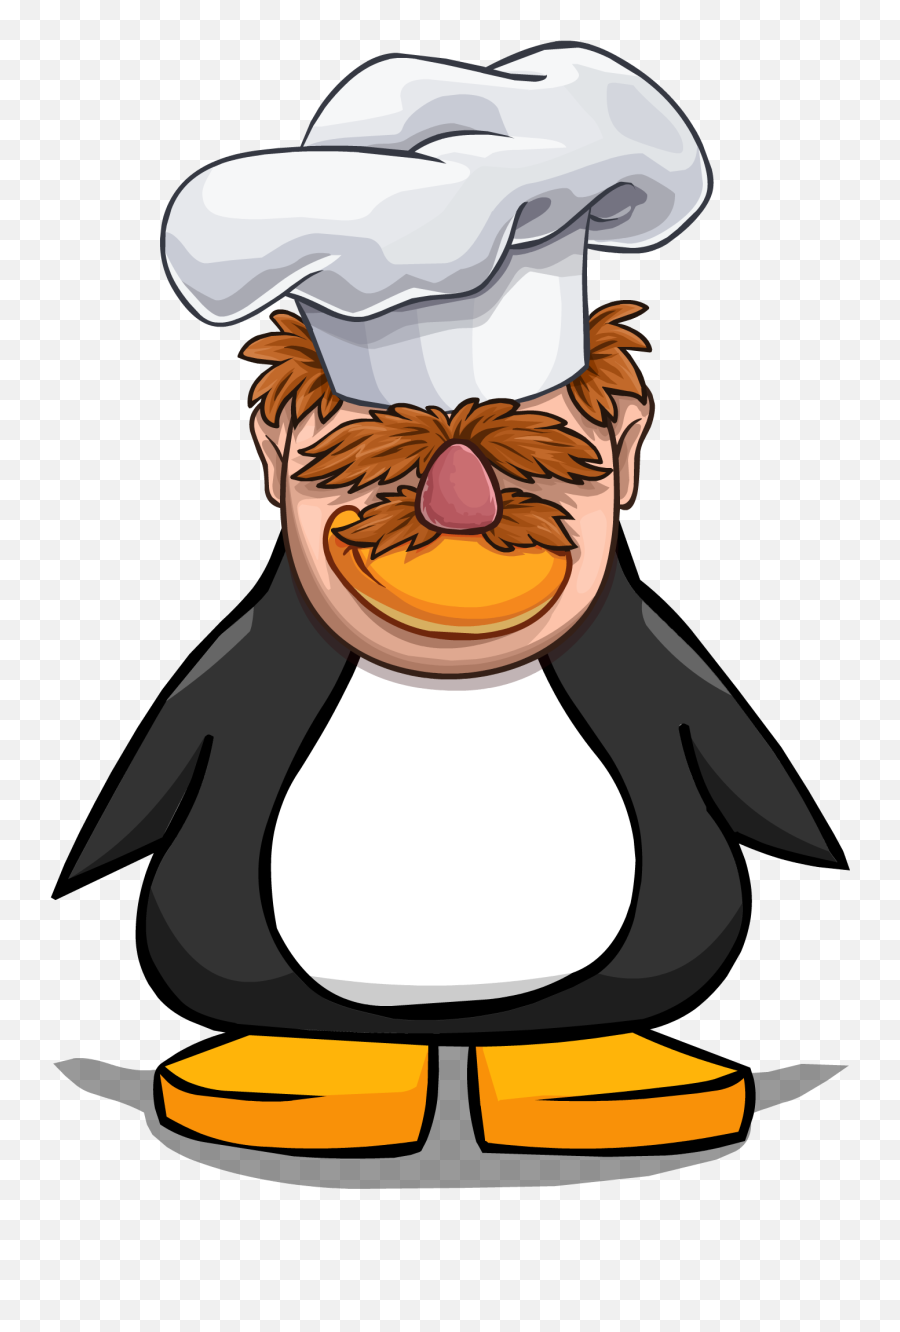 Swedish Chef Head From A Player Card - Club Penguin Green Club Penguin 3d Glasses Emoji,Snorkel Emoji